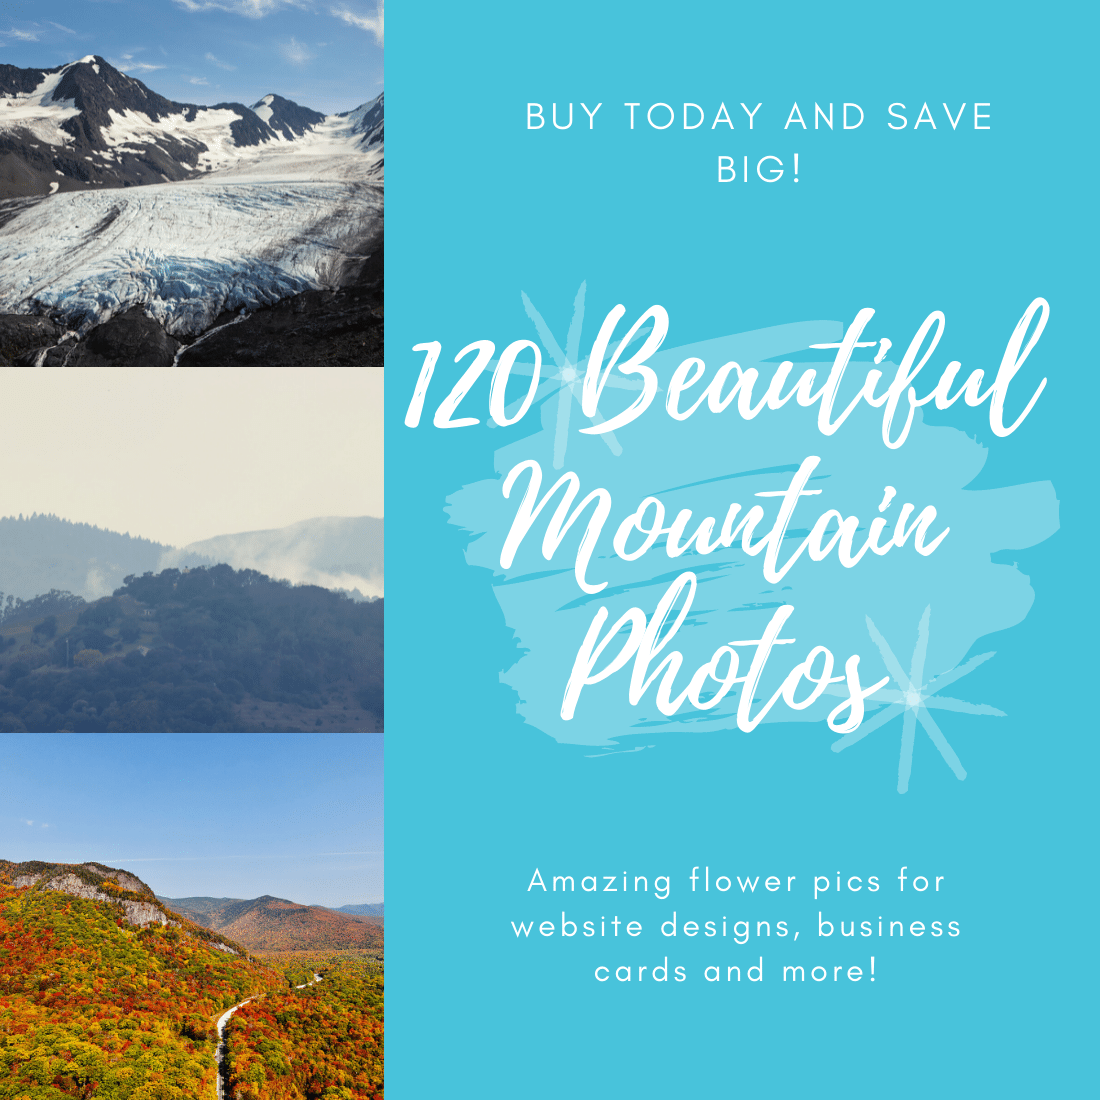 120 Beautiful Mountain Stock Photos Preview Image.